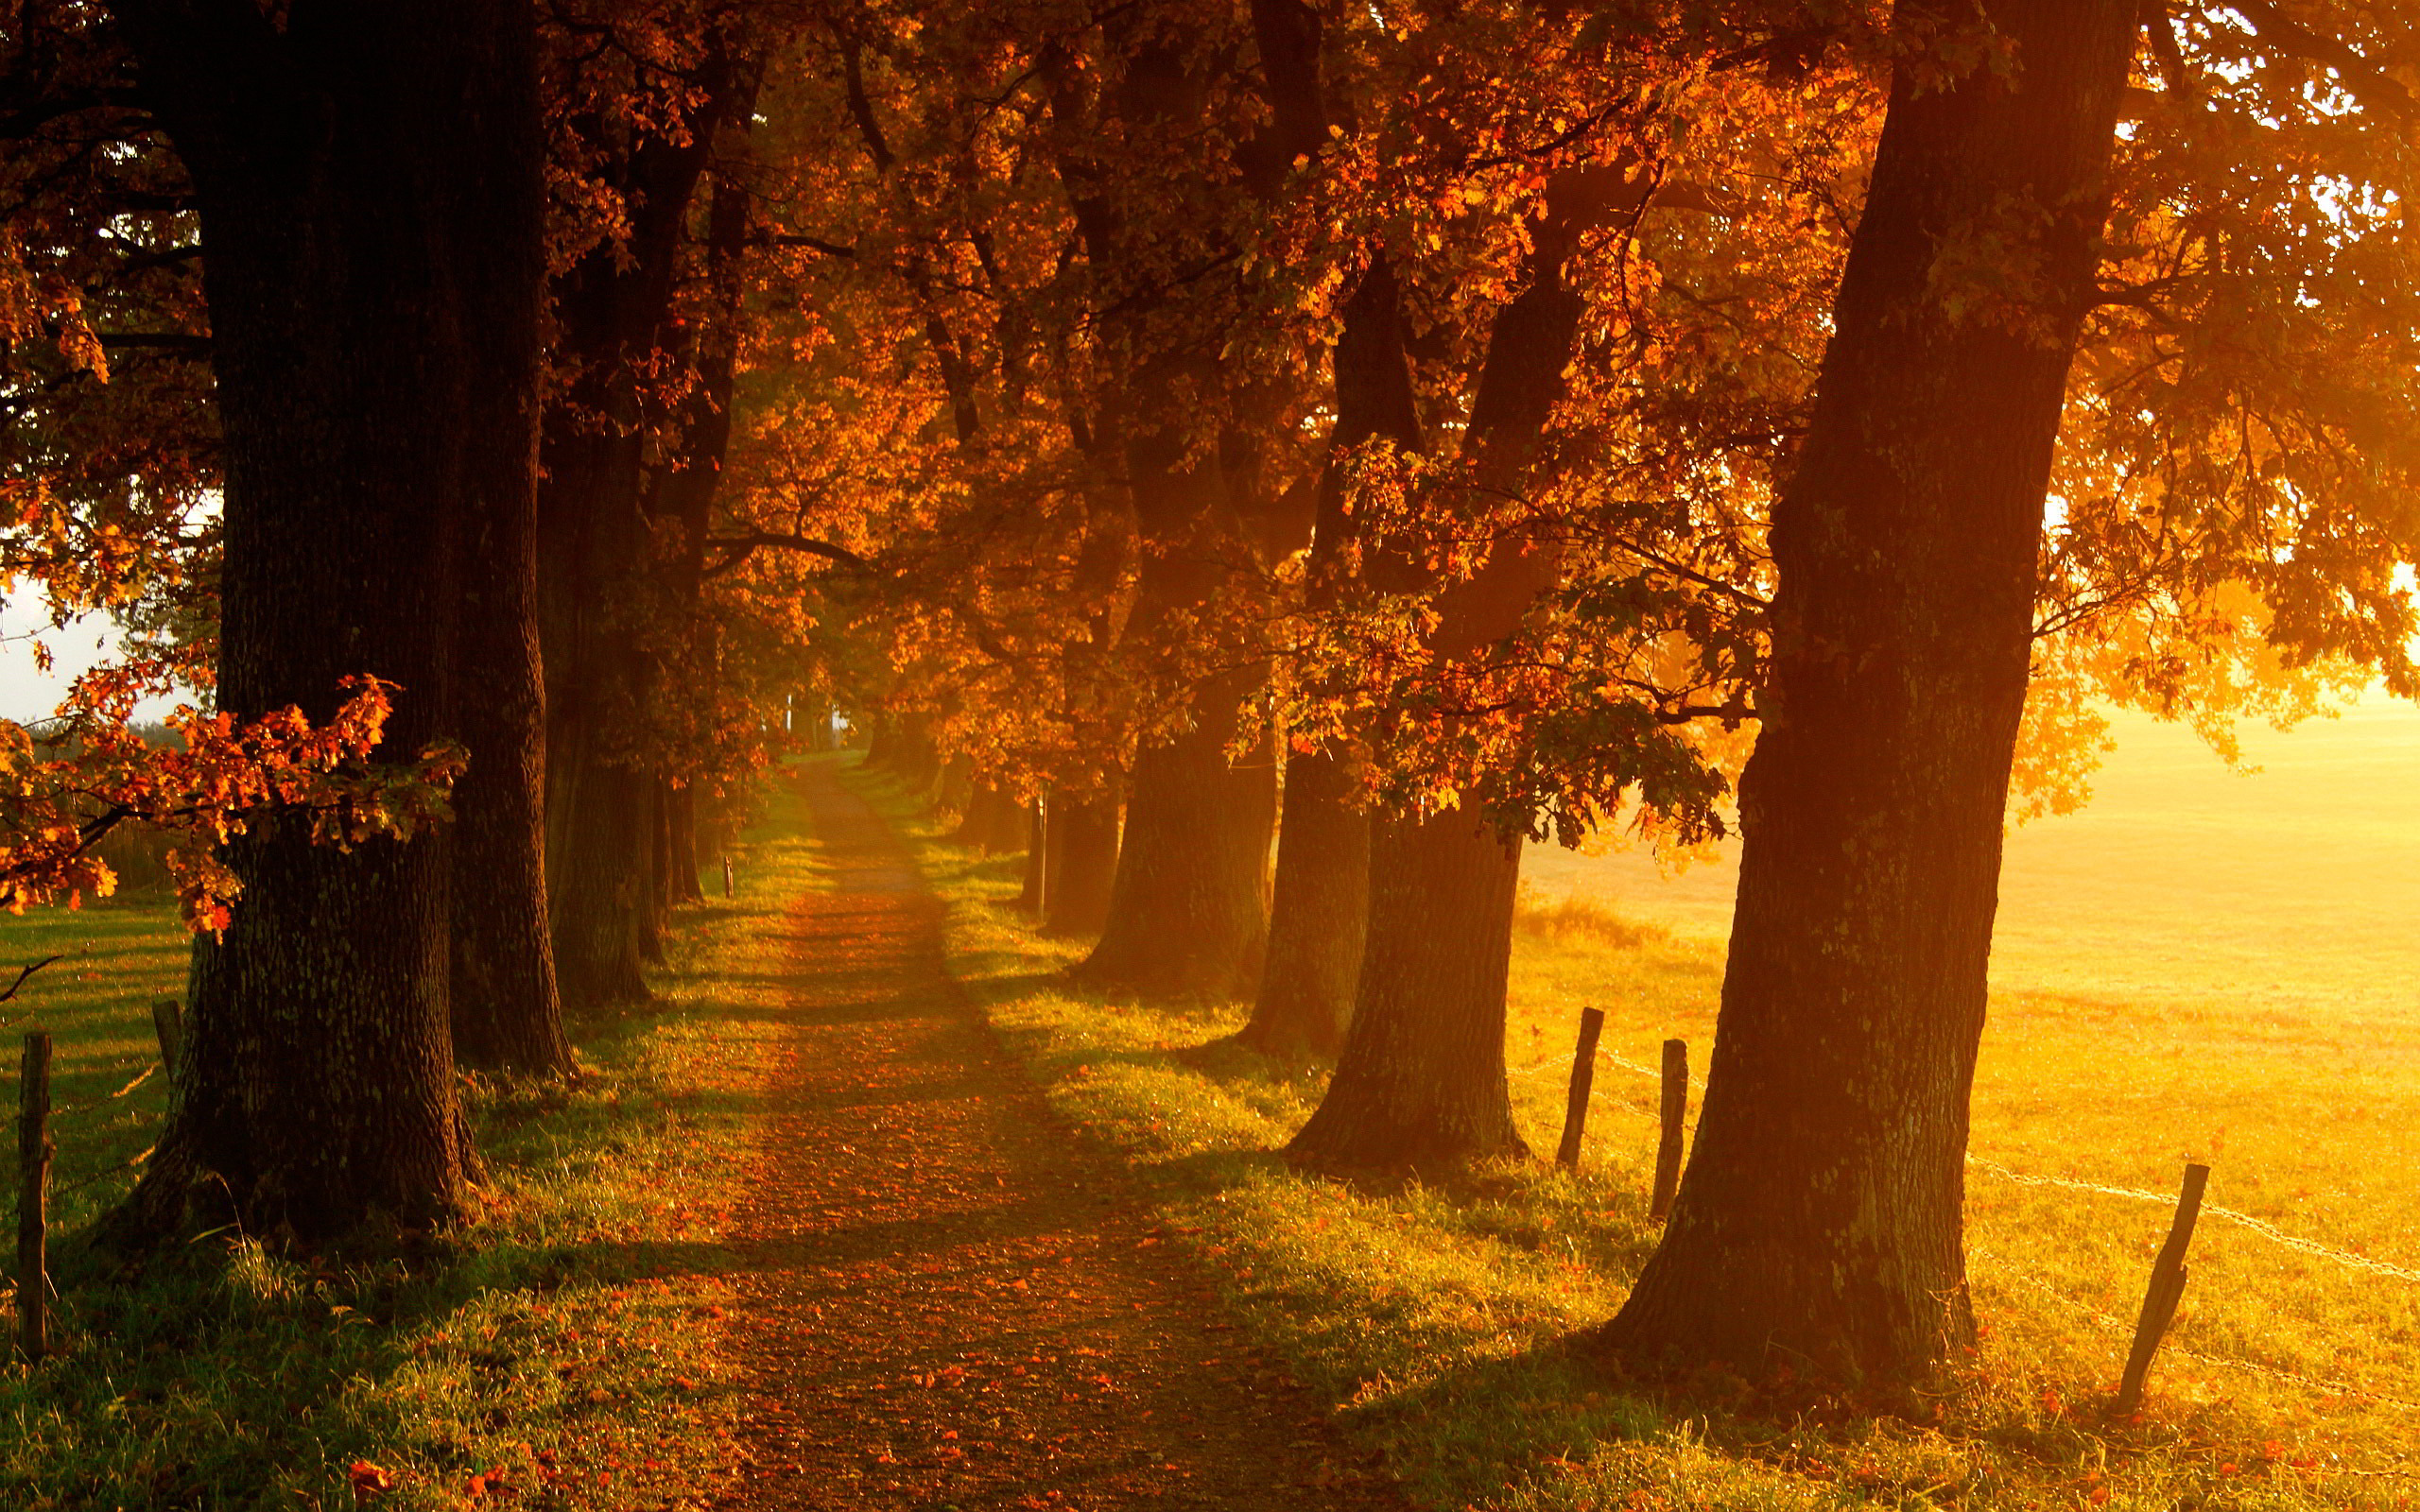 Beautiful Fall Pictures For Desktop - 2560x1600 Wallpaper 